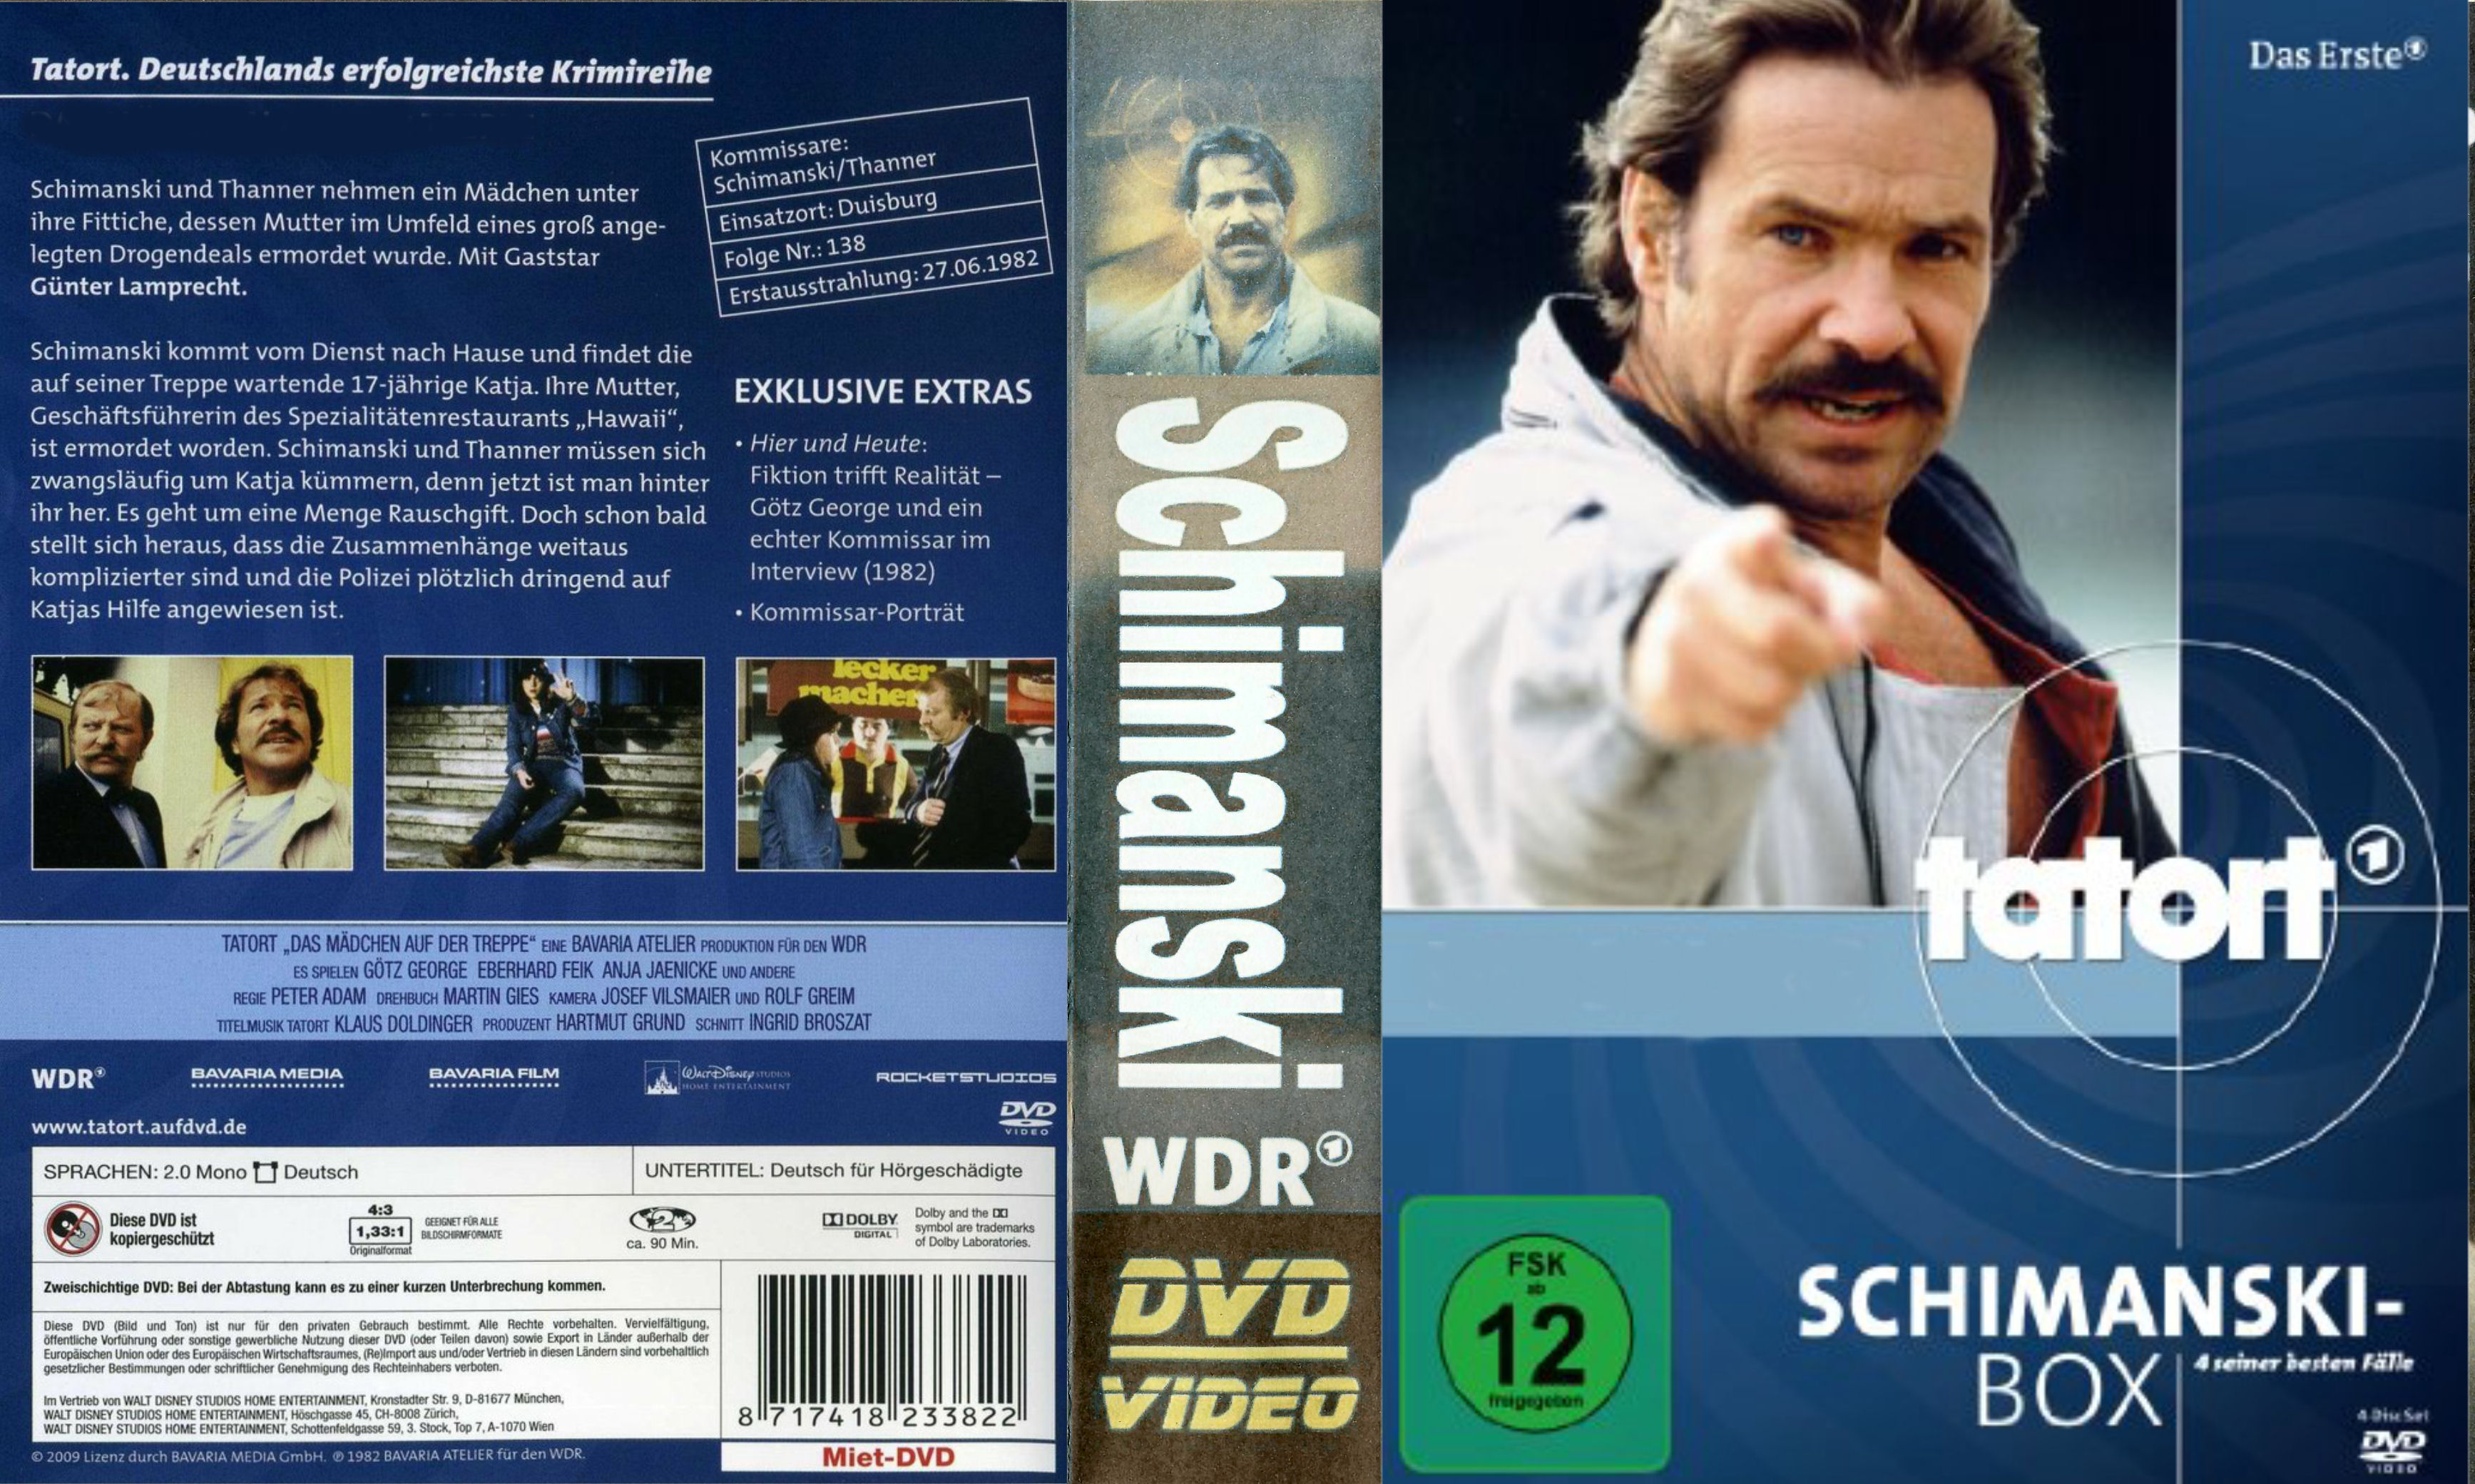 Schimanski Collectie Tatort No Subs - DvD 25